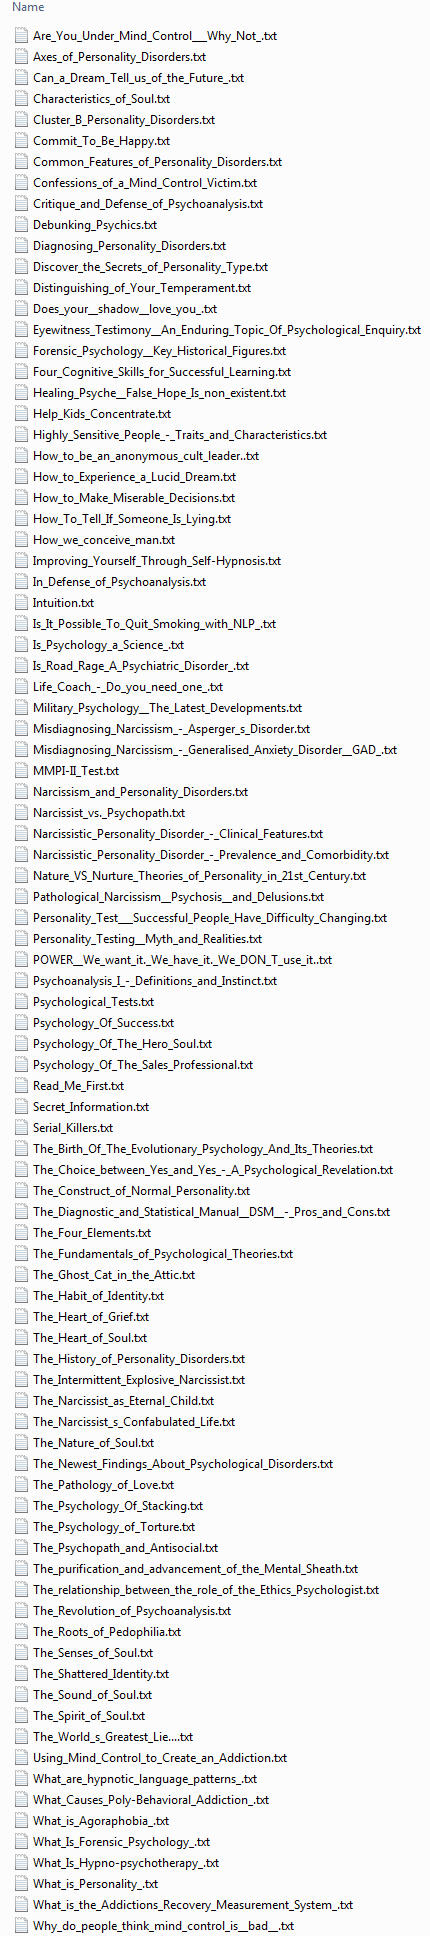 Psychology PLR Articles